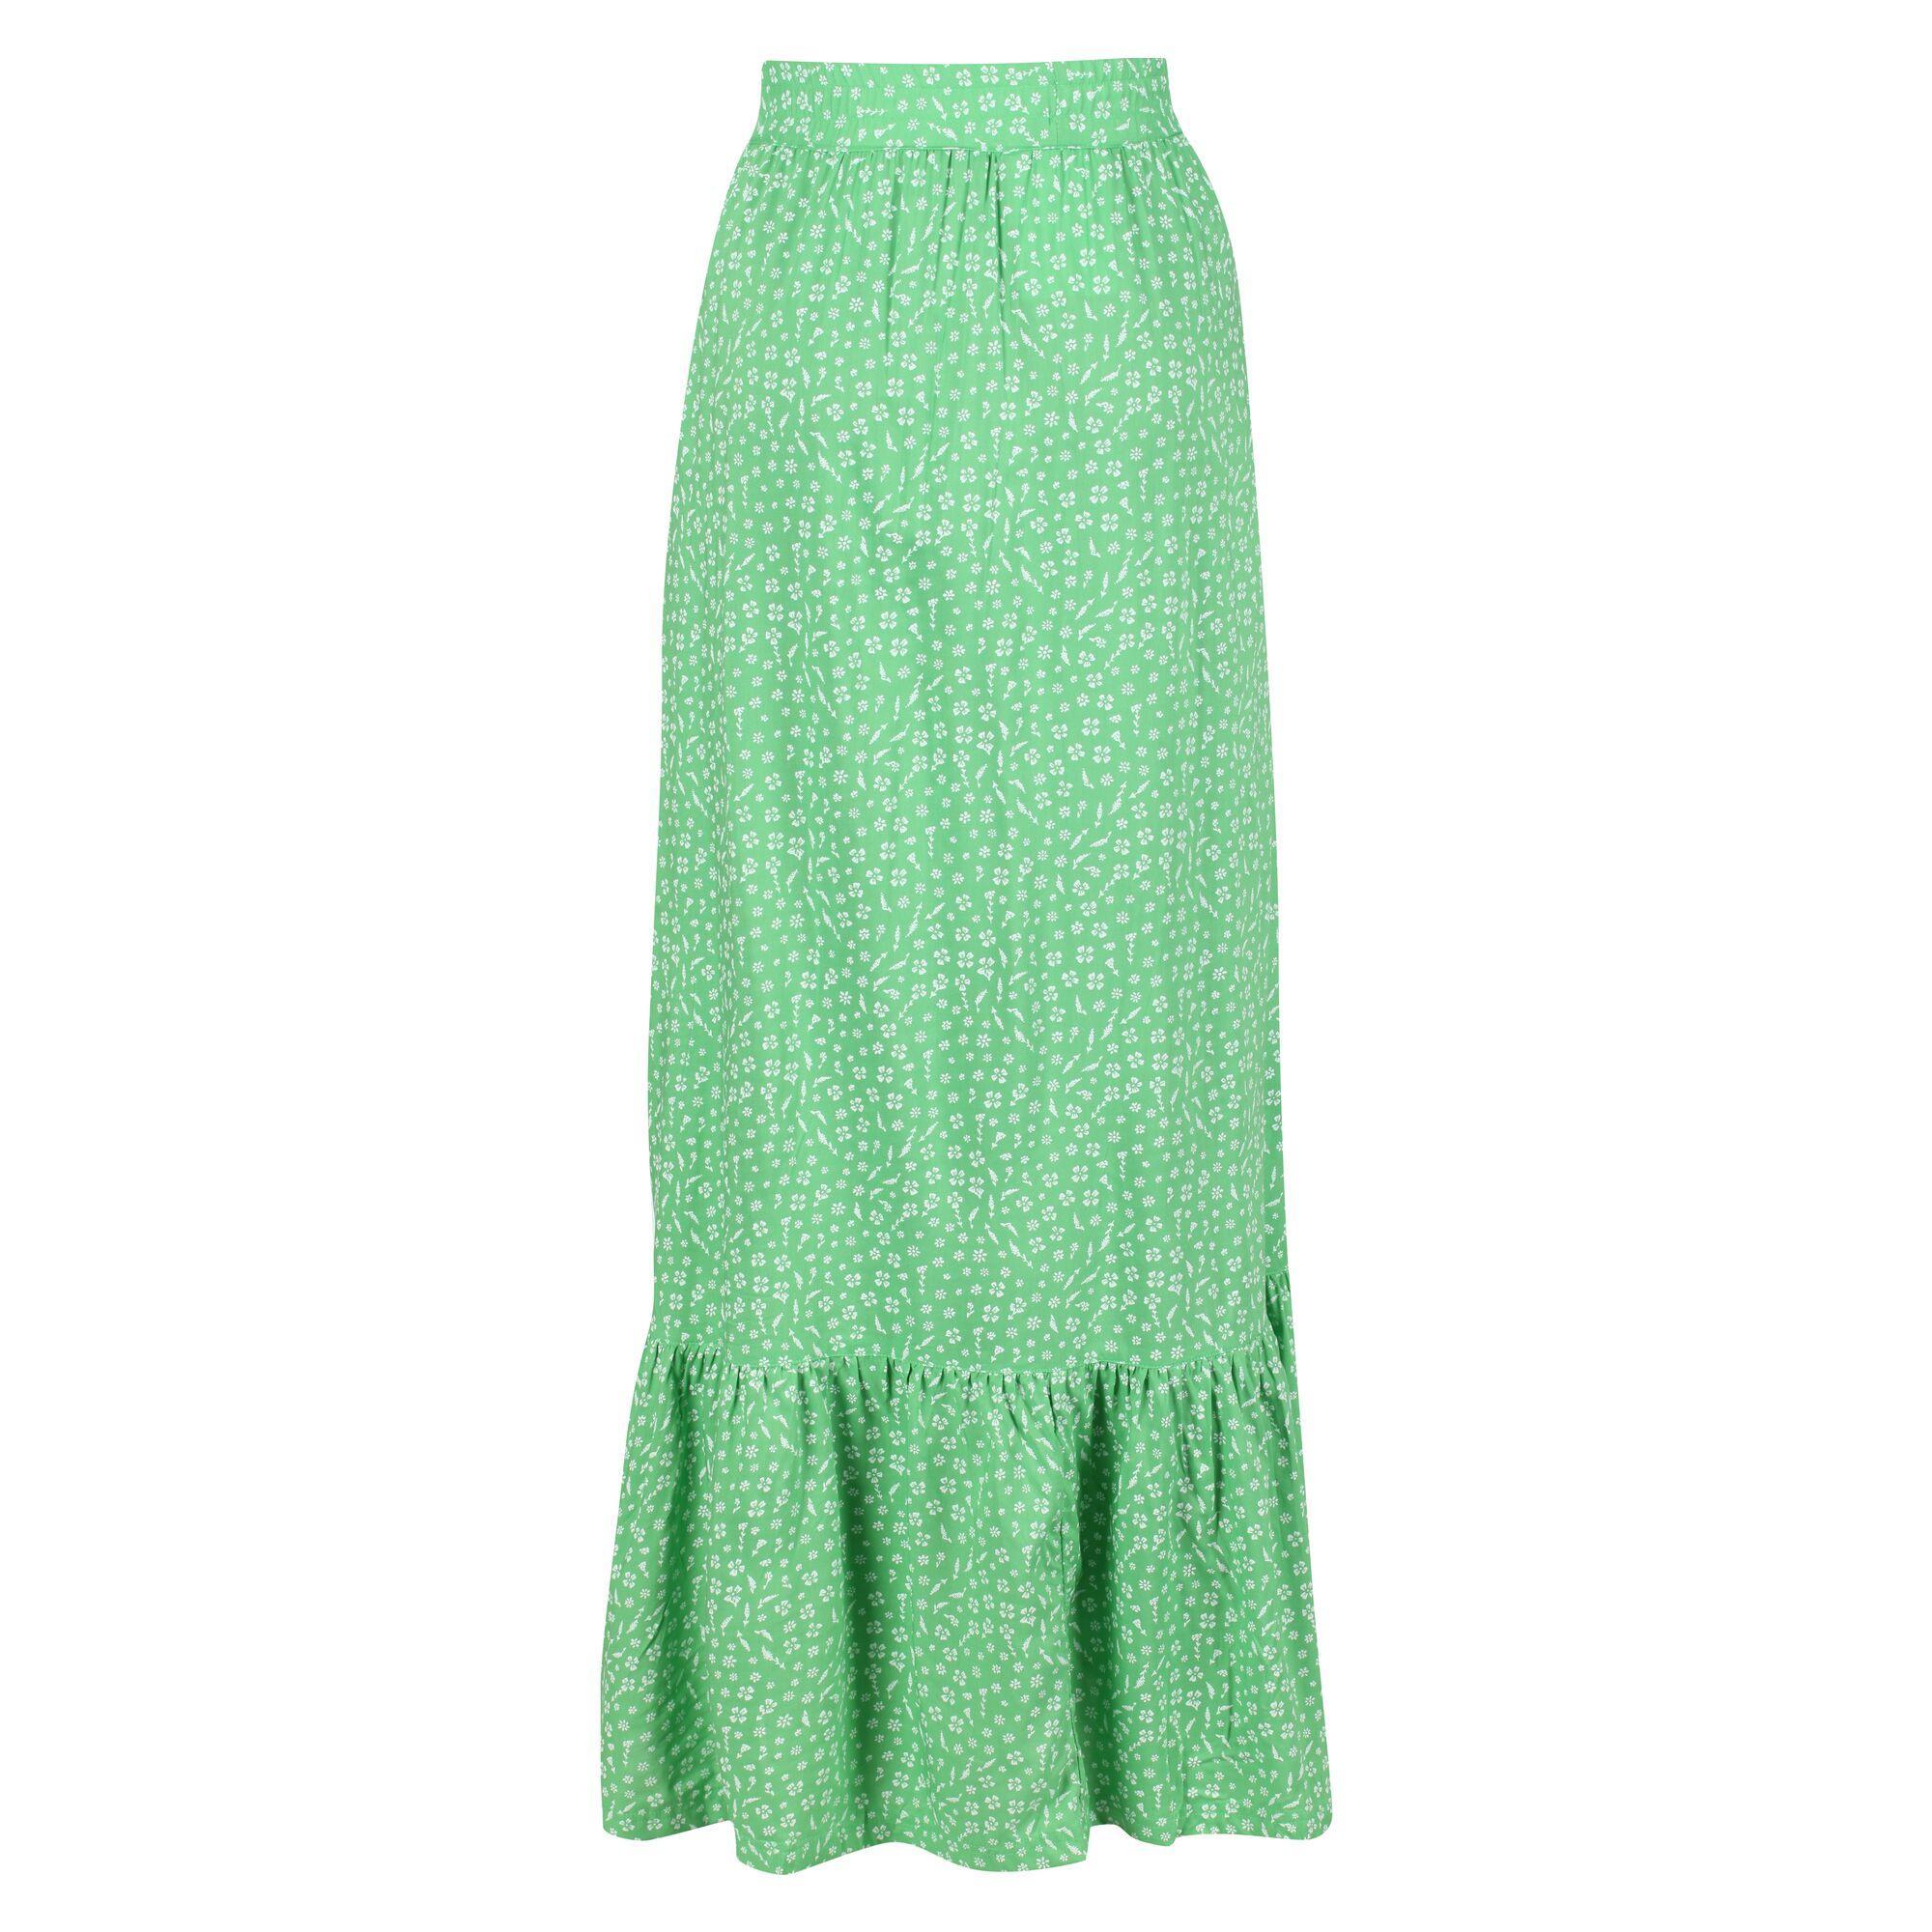 Regatta Womens/Ladies Hadriana Ditsy Print Maxi Skirt (Vibrant Green) (12 UK)